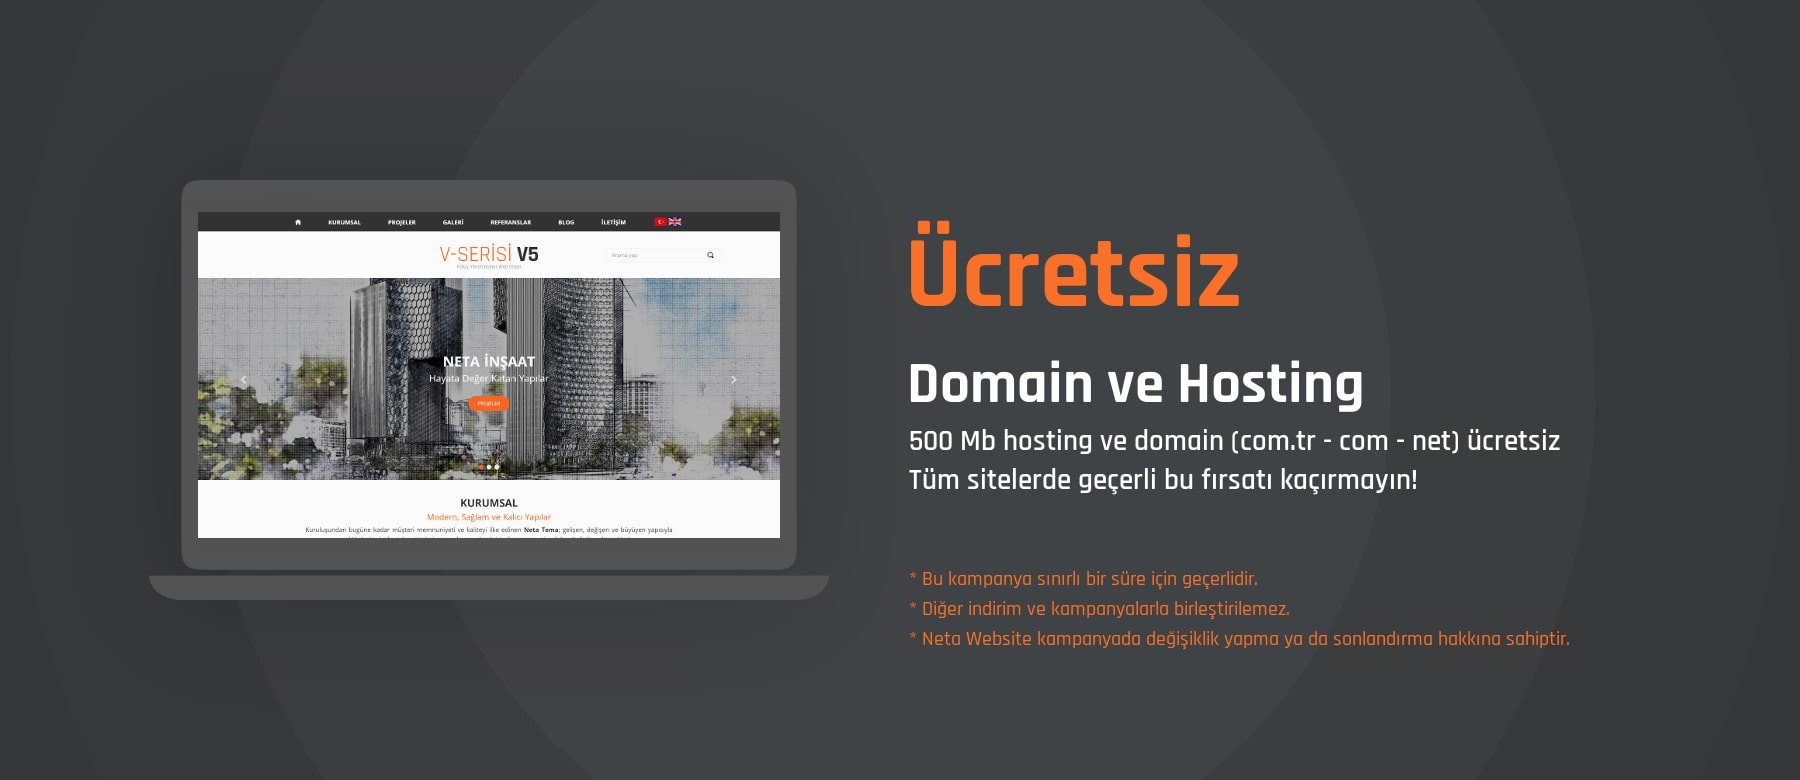 Ücretsiz Hosting ve Domain